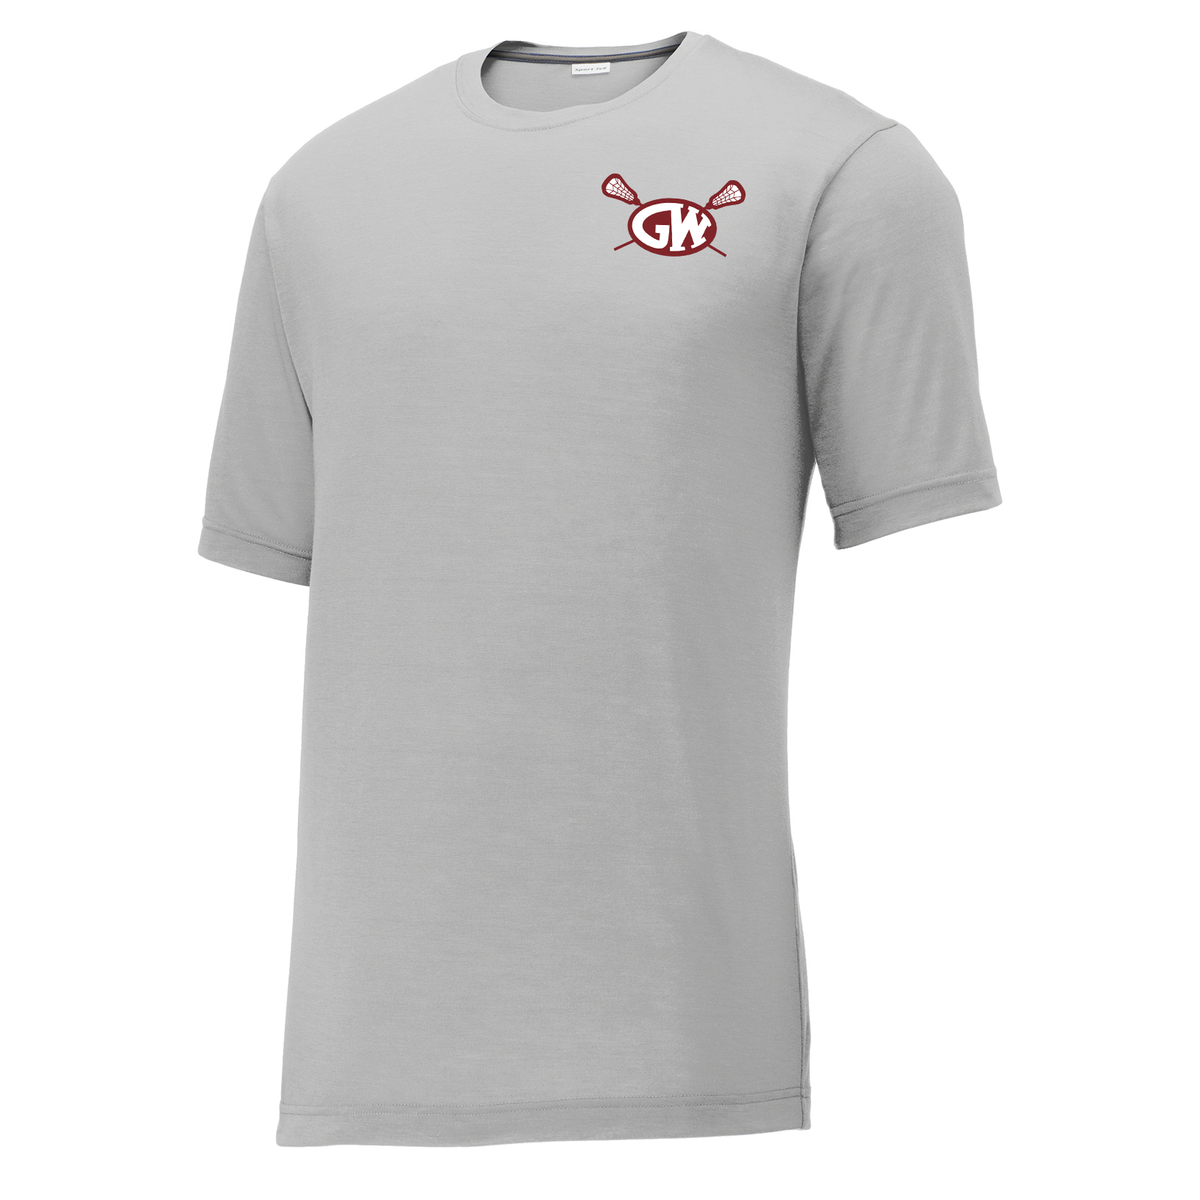 George Washington Lacrosse CottonTouch Performance T-Shirt